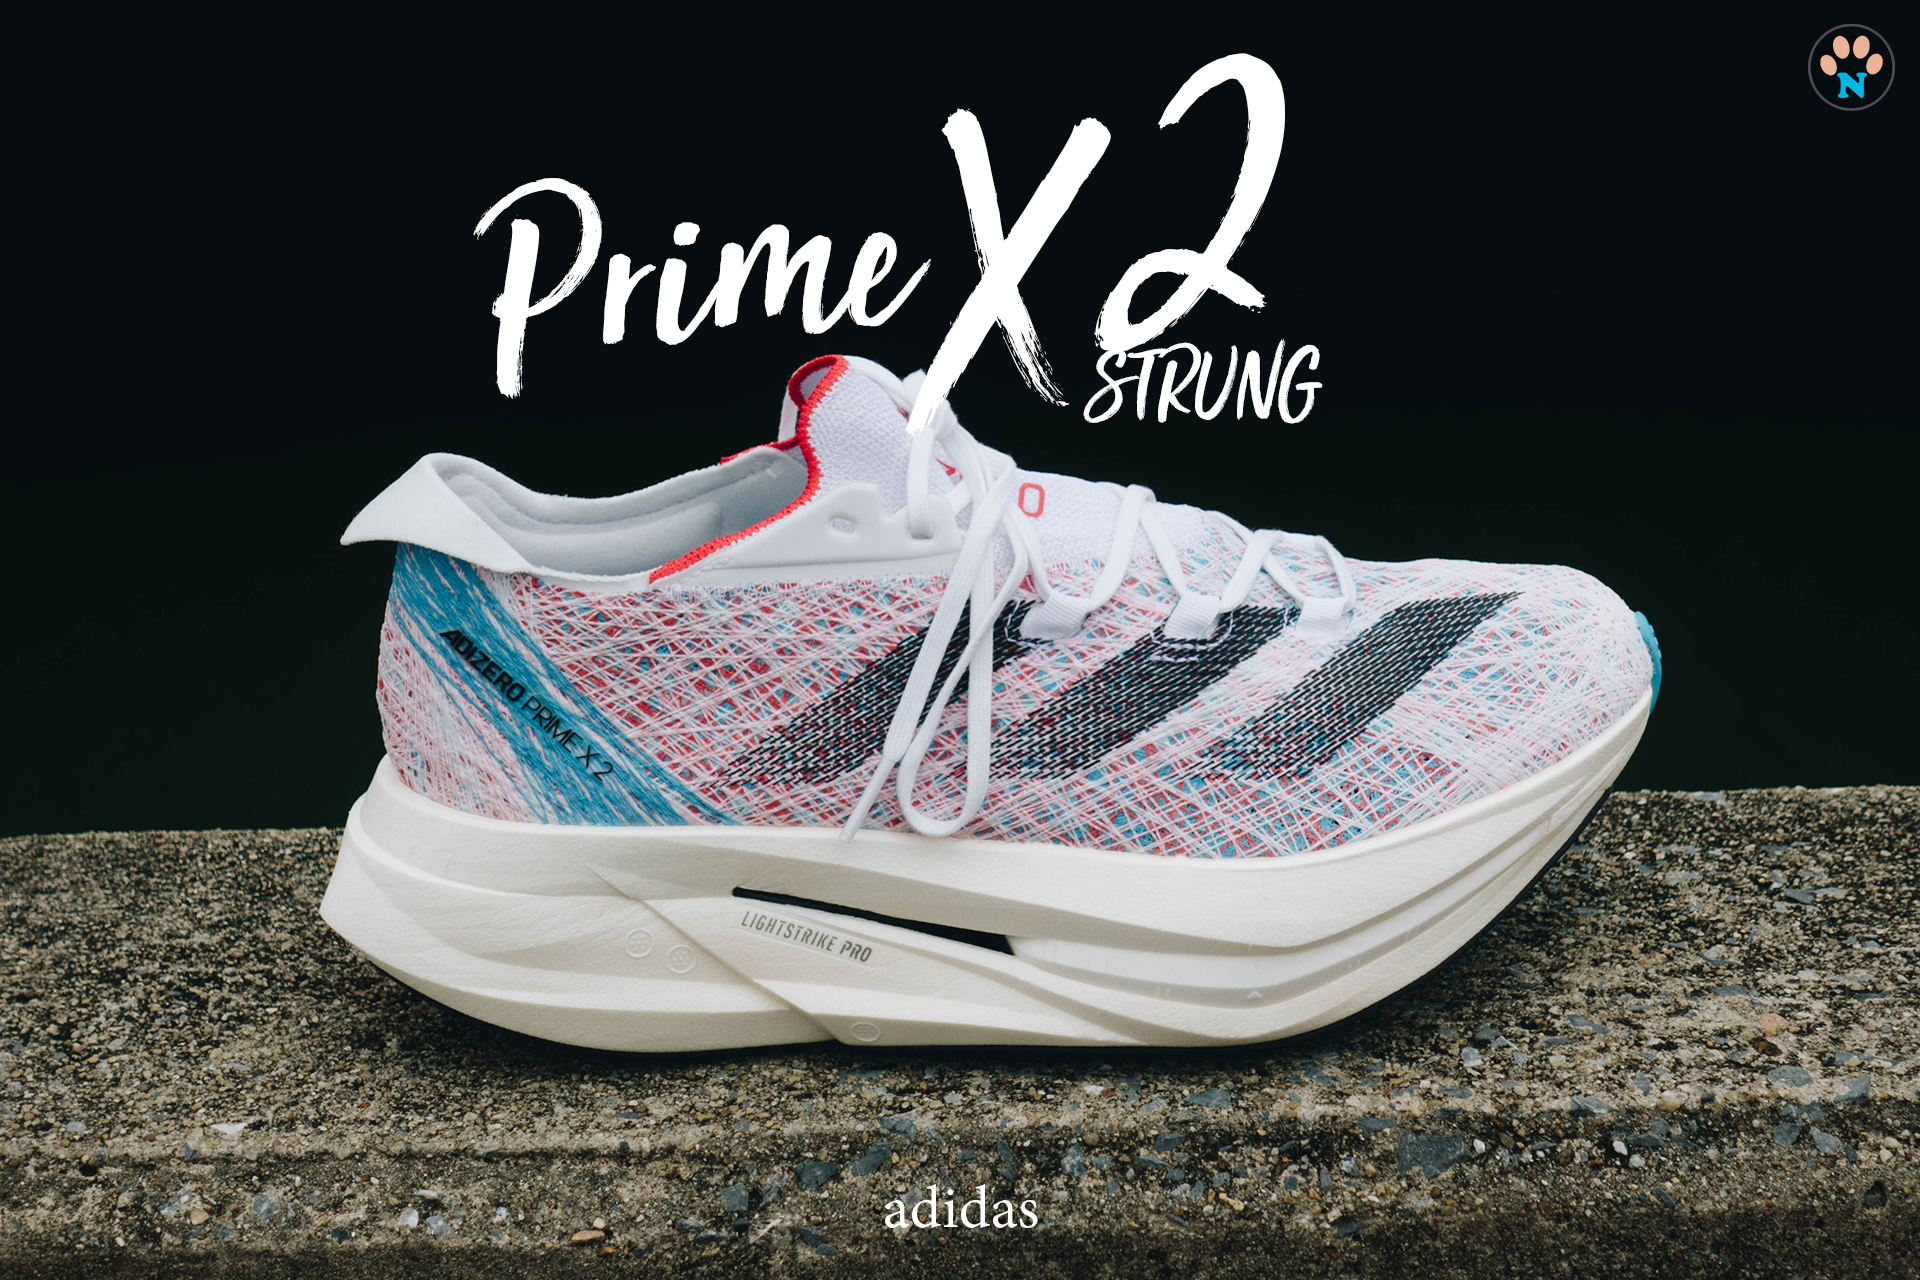 Prime X 2 STRUNG cover